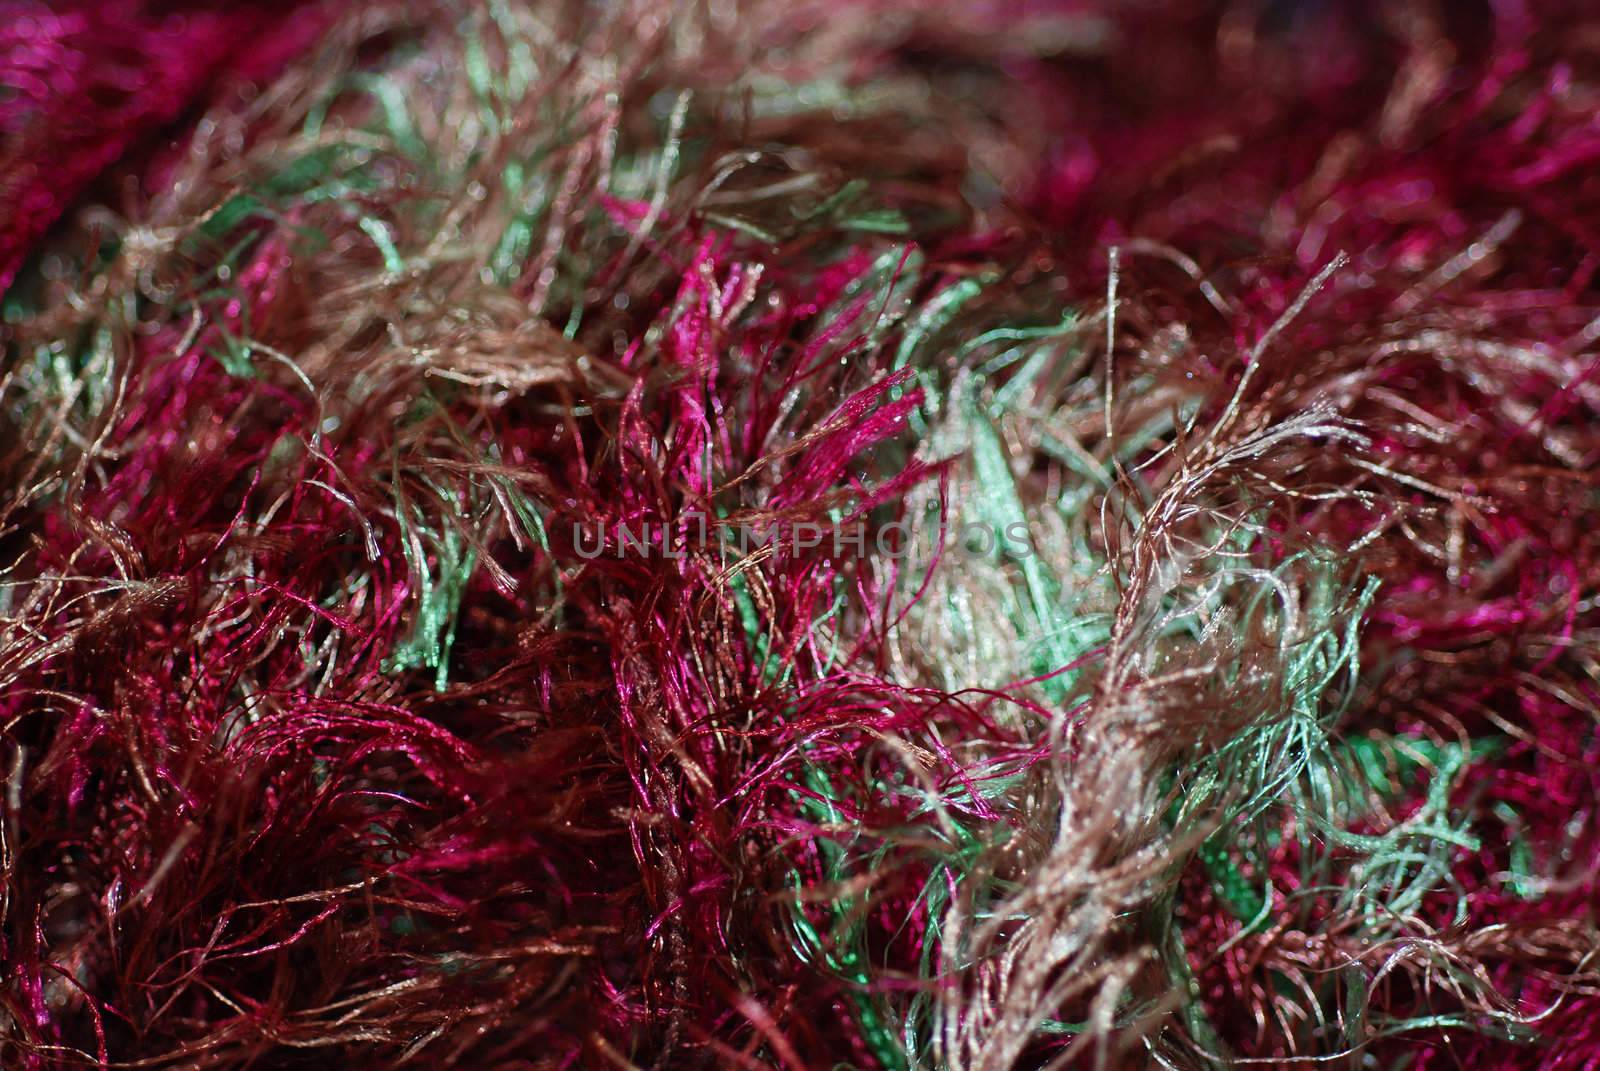 A close up macro photograph of colourful fibers